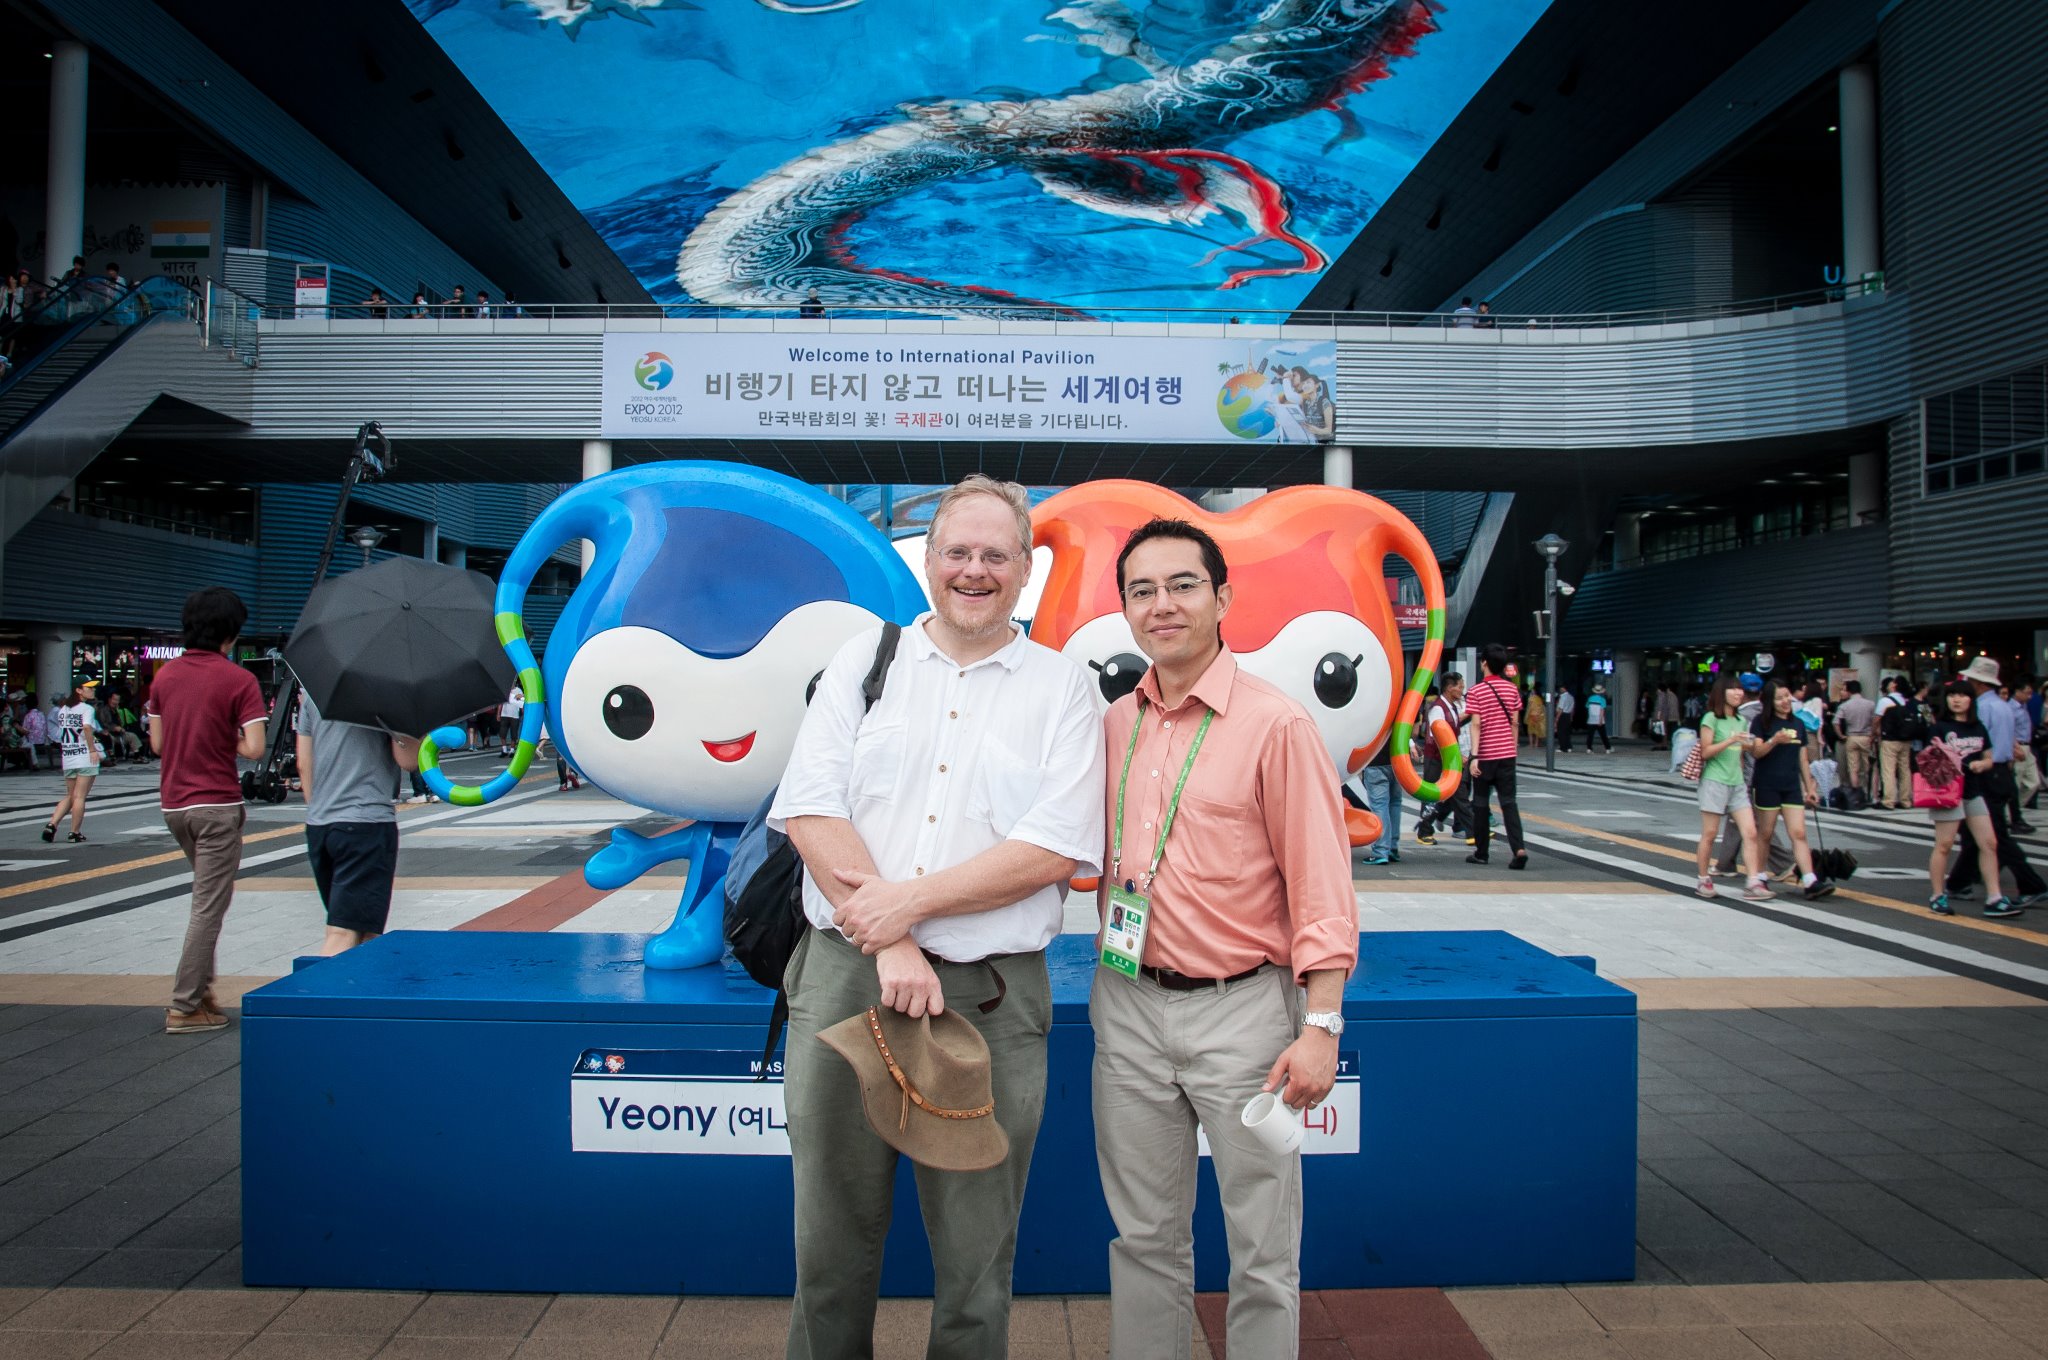 César Corona and Dr. Nick Cull at Expo 2012 Yeosu